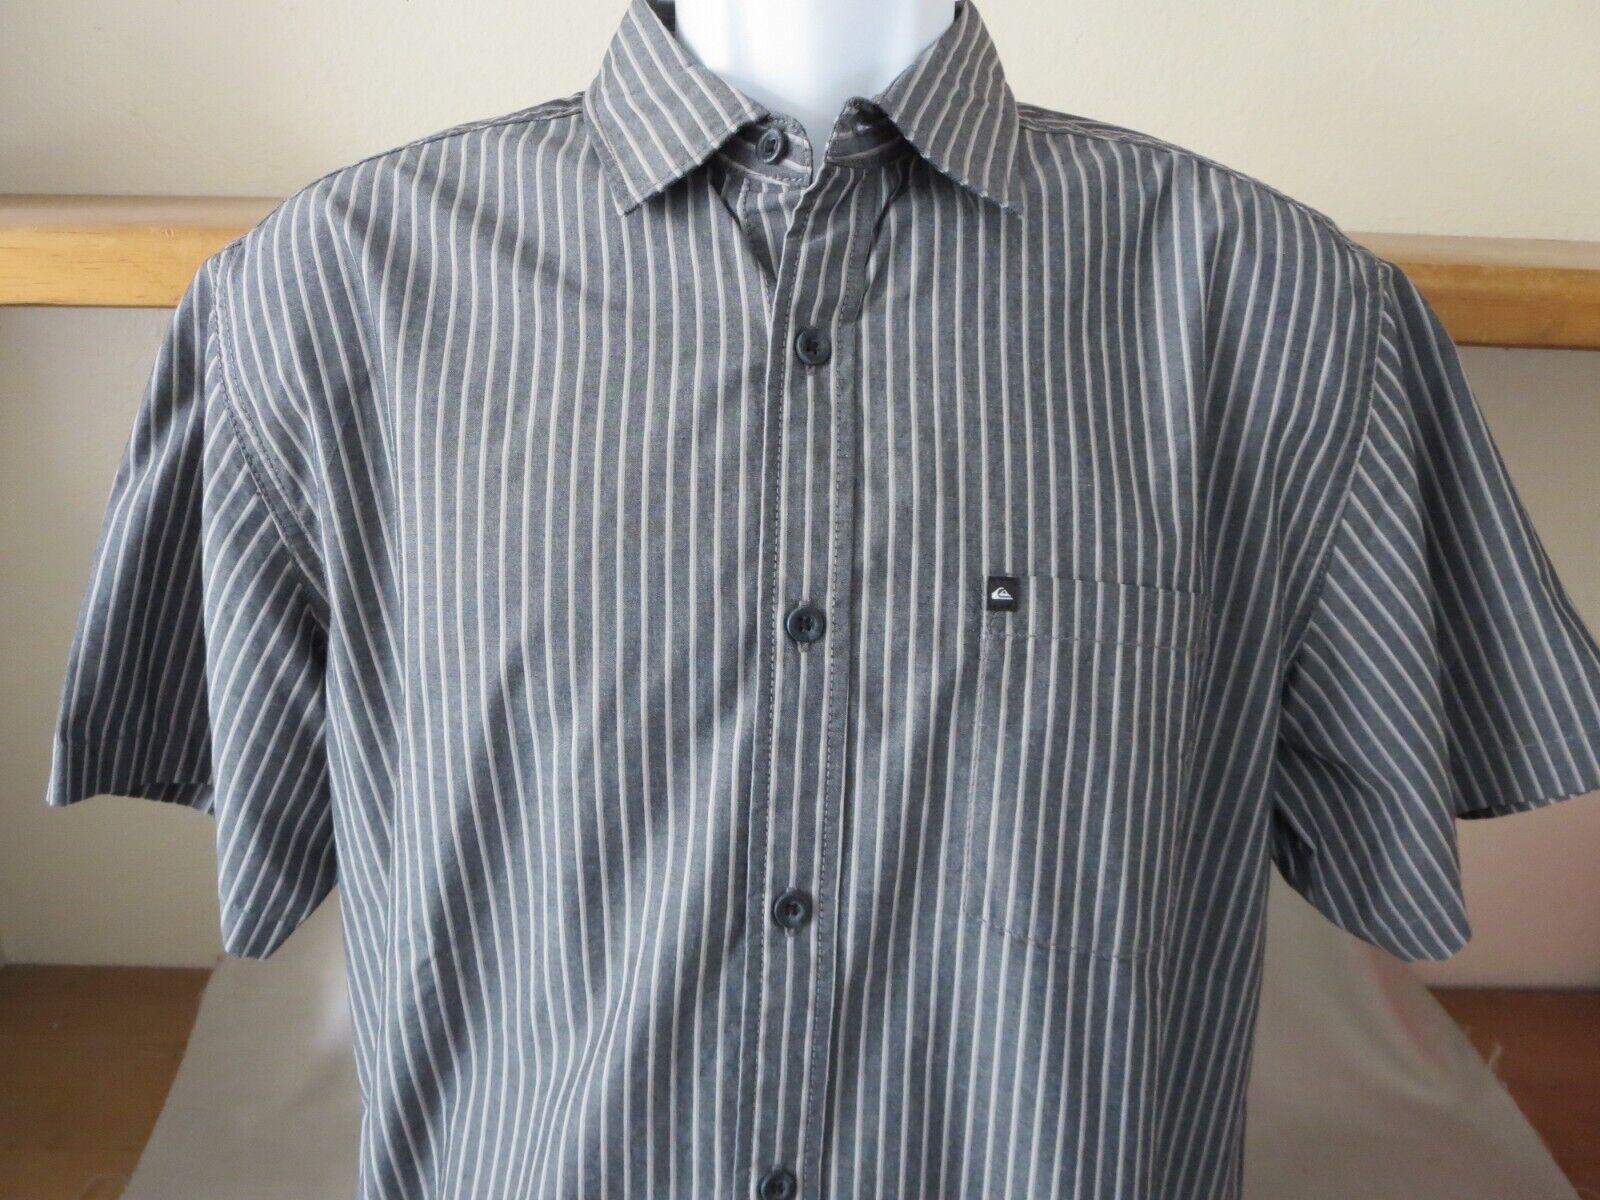 New Quicksilver Men's Shirt Black Color Striped Beach Summer Fishing Size Medium